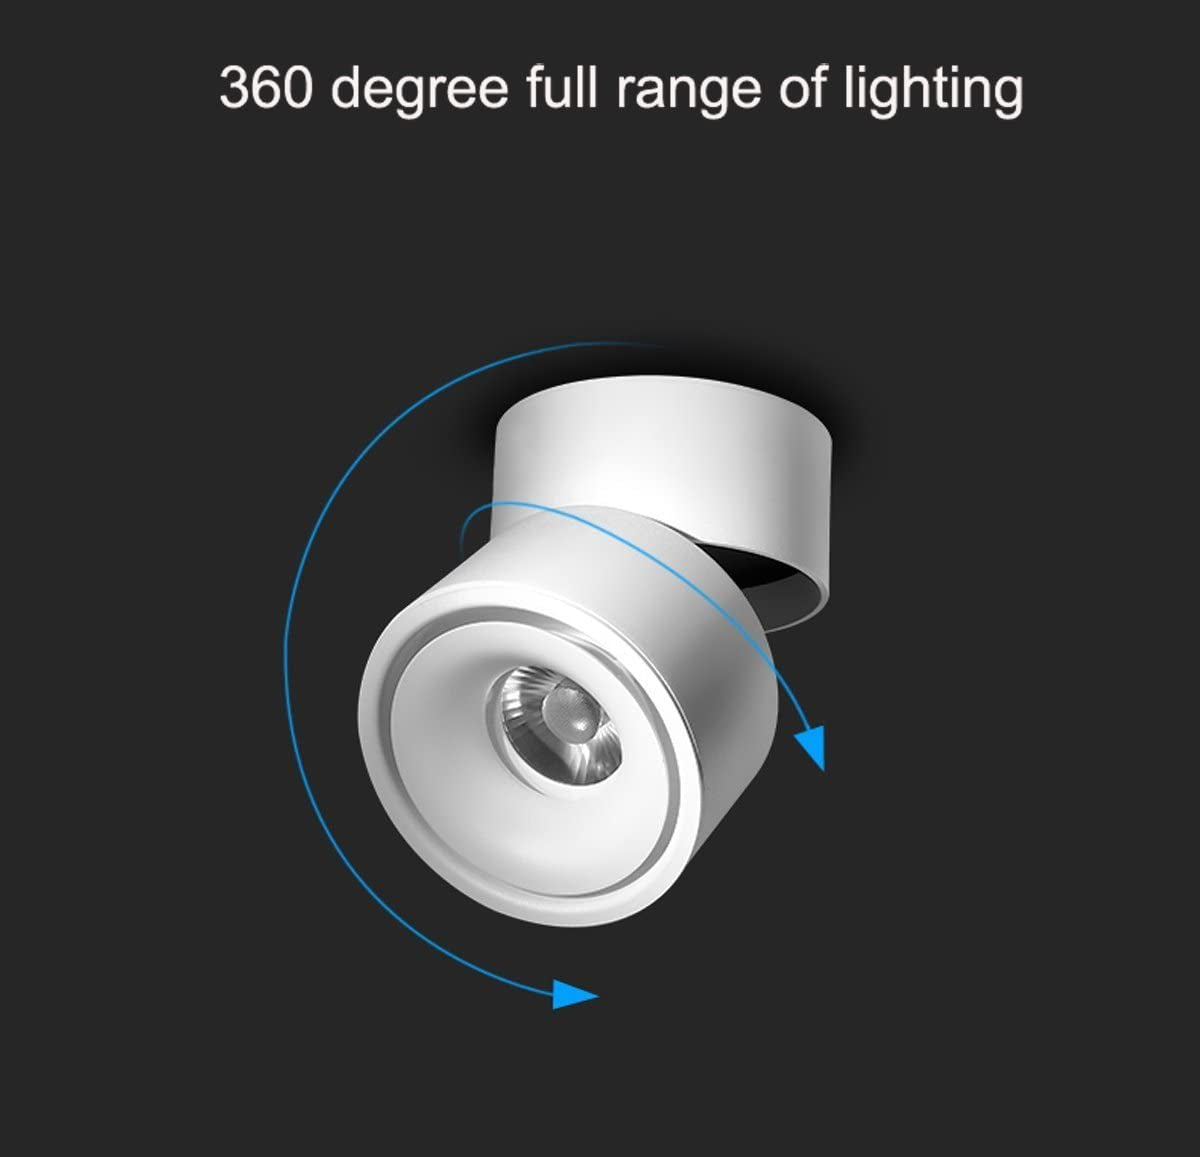 LANBOS Indoor 10W LED Spotlight 360°Adjustable Ceiling Downlight /Surface Mounted COB Lighting Led/Natural White 4000K/ 10X10Cm/Aluminum Wall Lamp or Spot Light (White-Natural White)